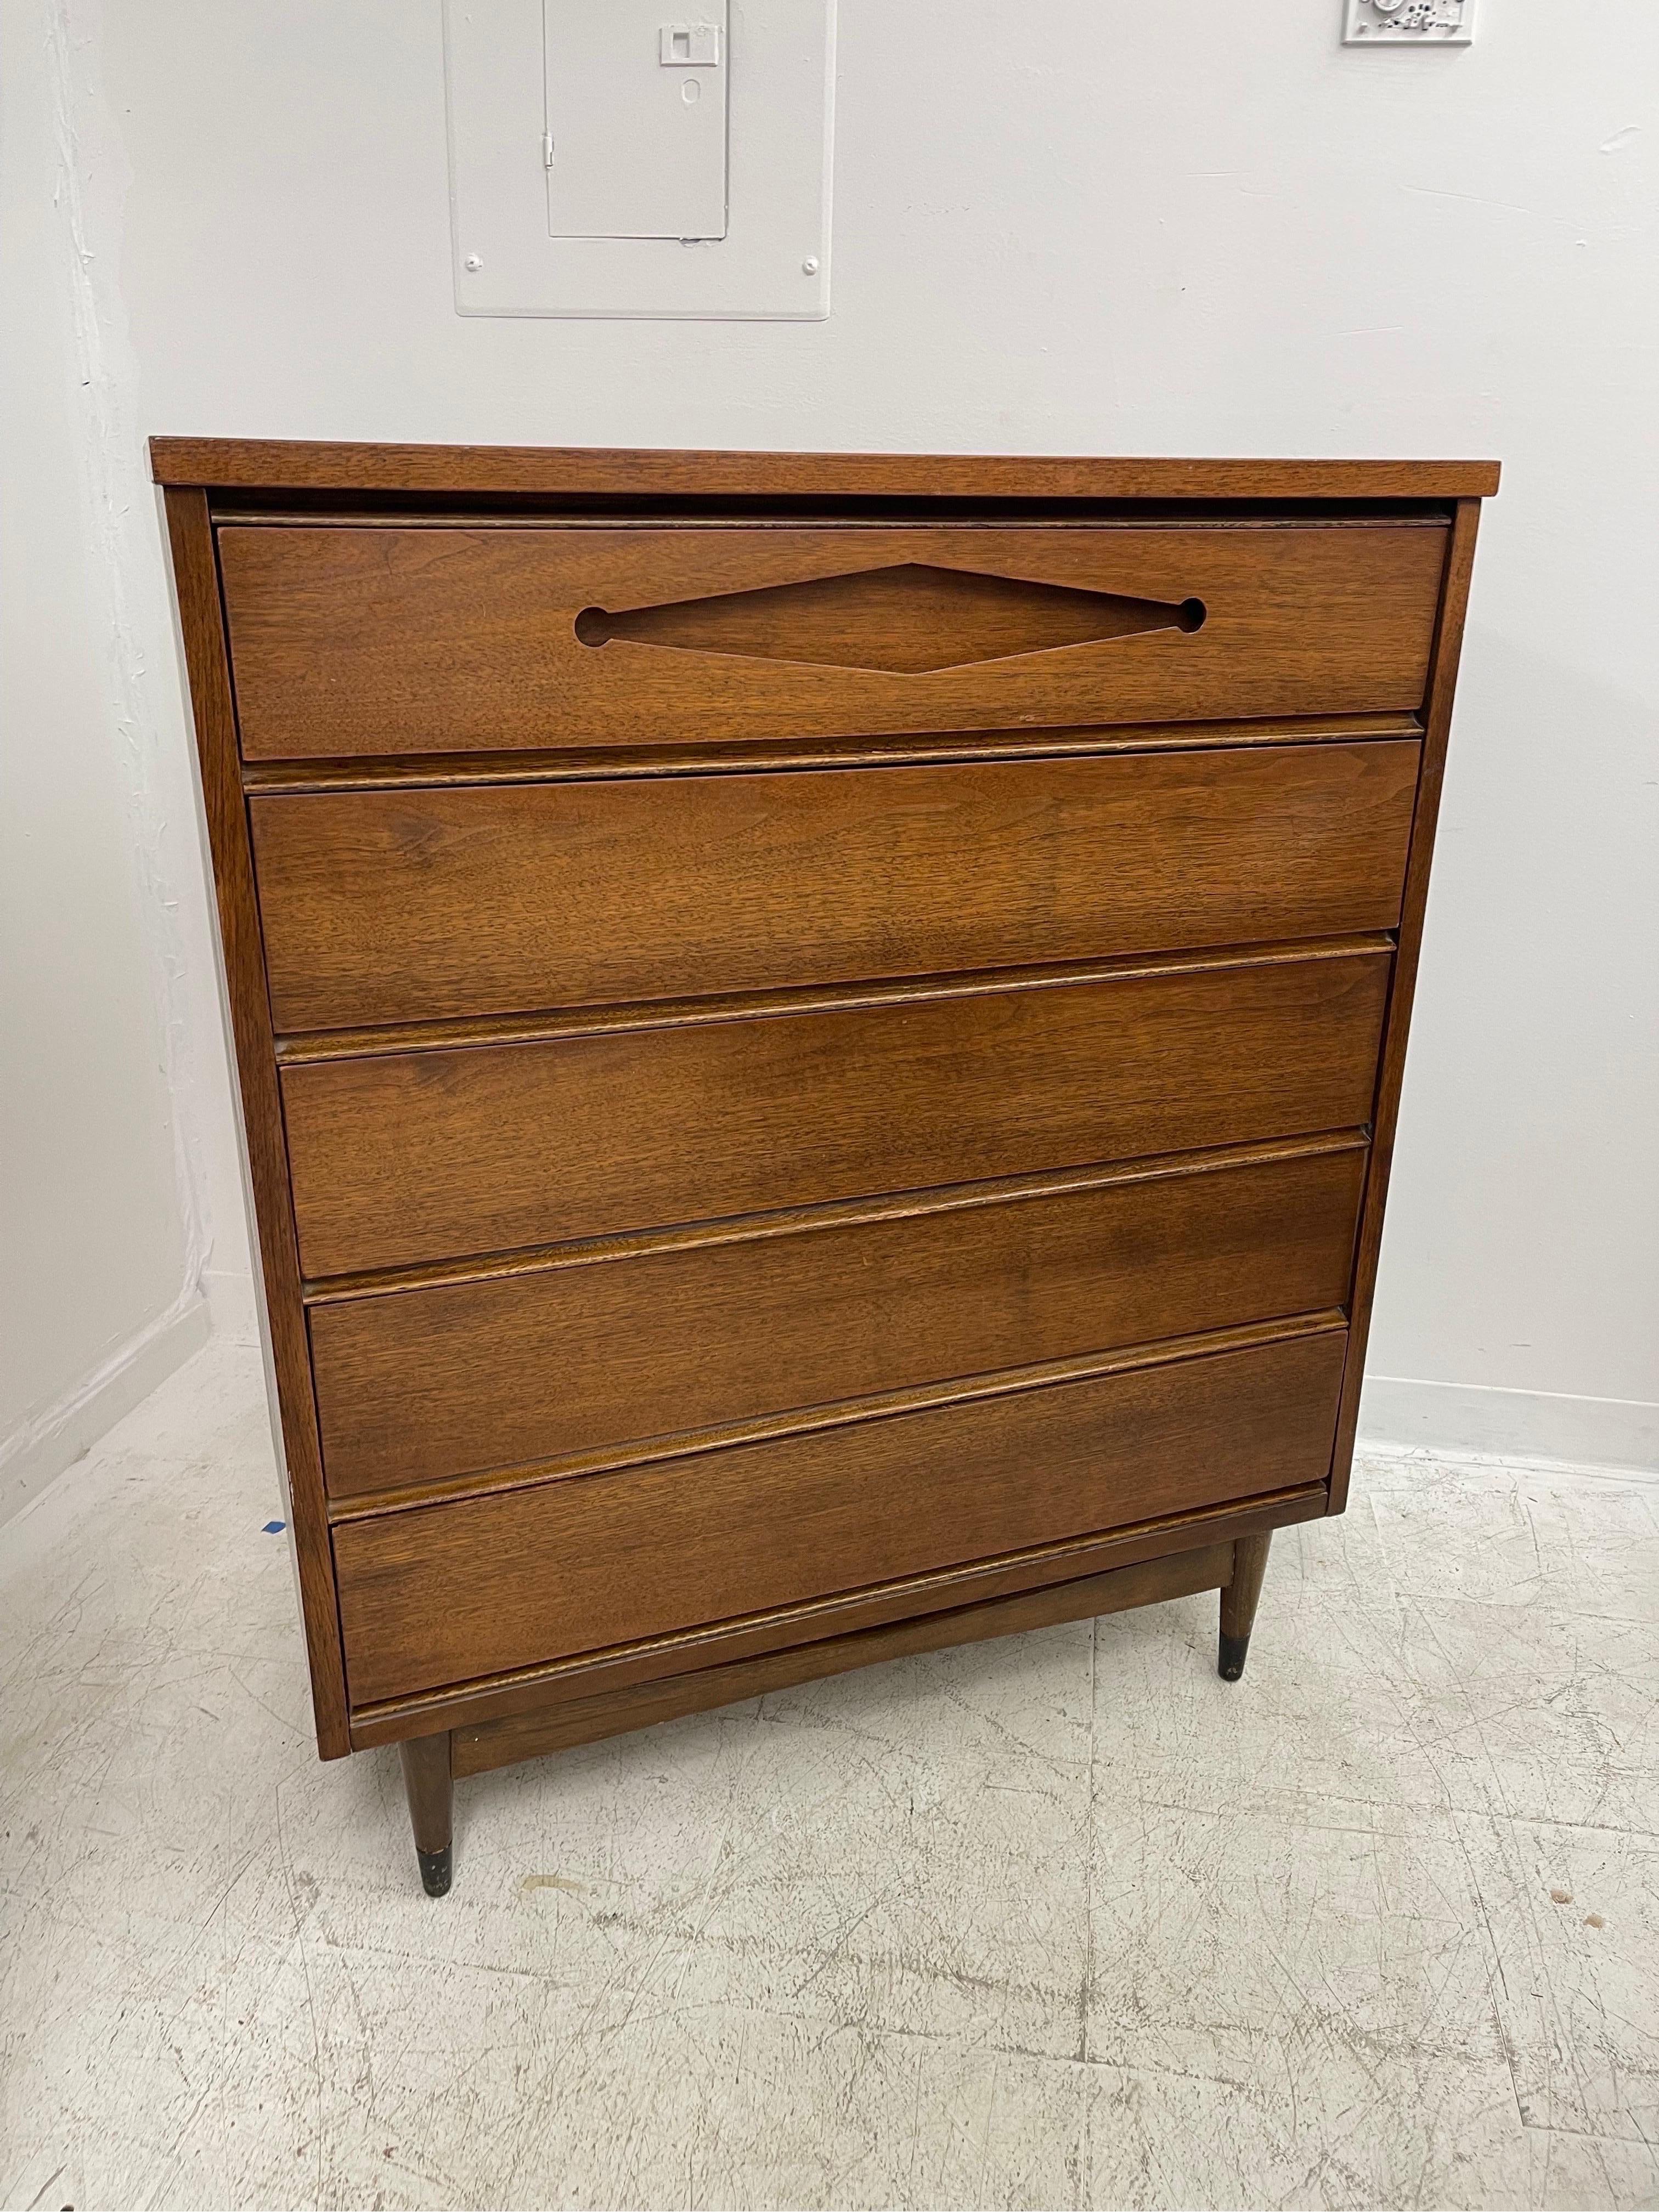 Vintage Mid-Century Modern walnut dresser dovetail drawers.

Dimensions. 36 W ; 43 H ; 19 D.